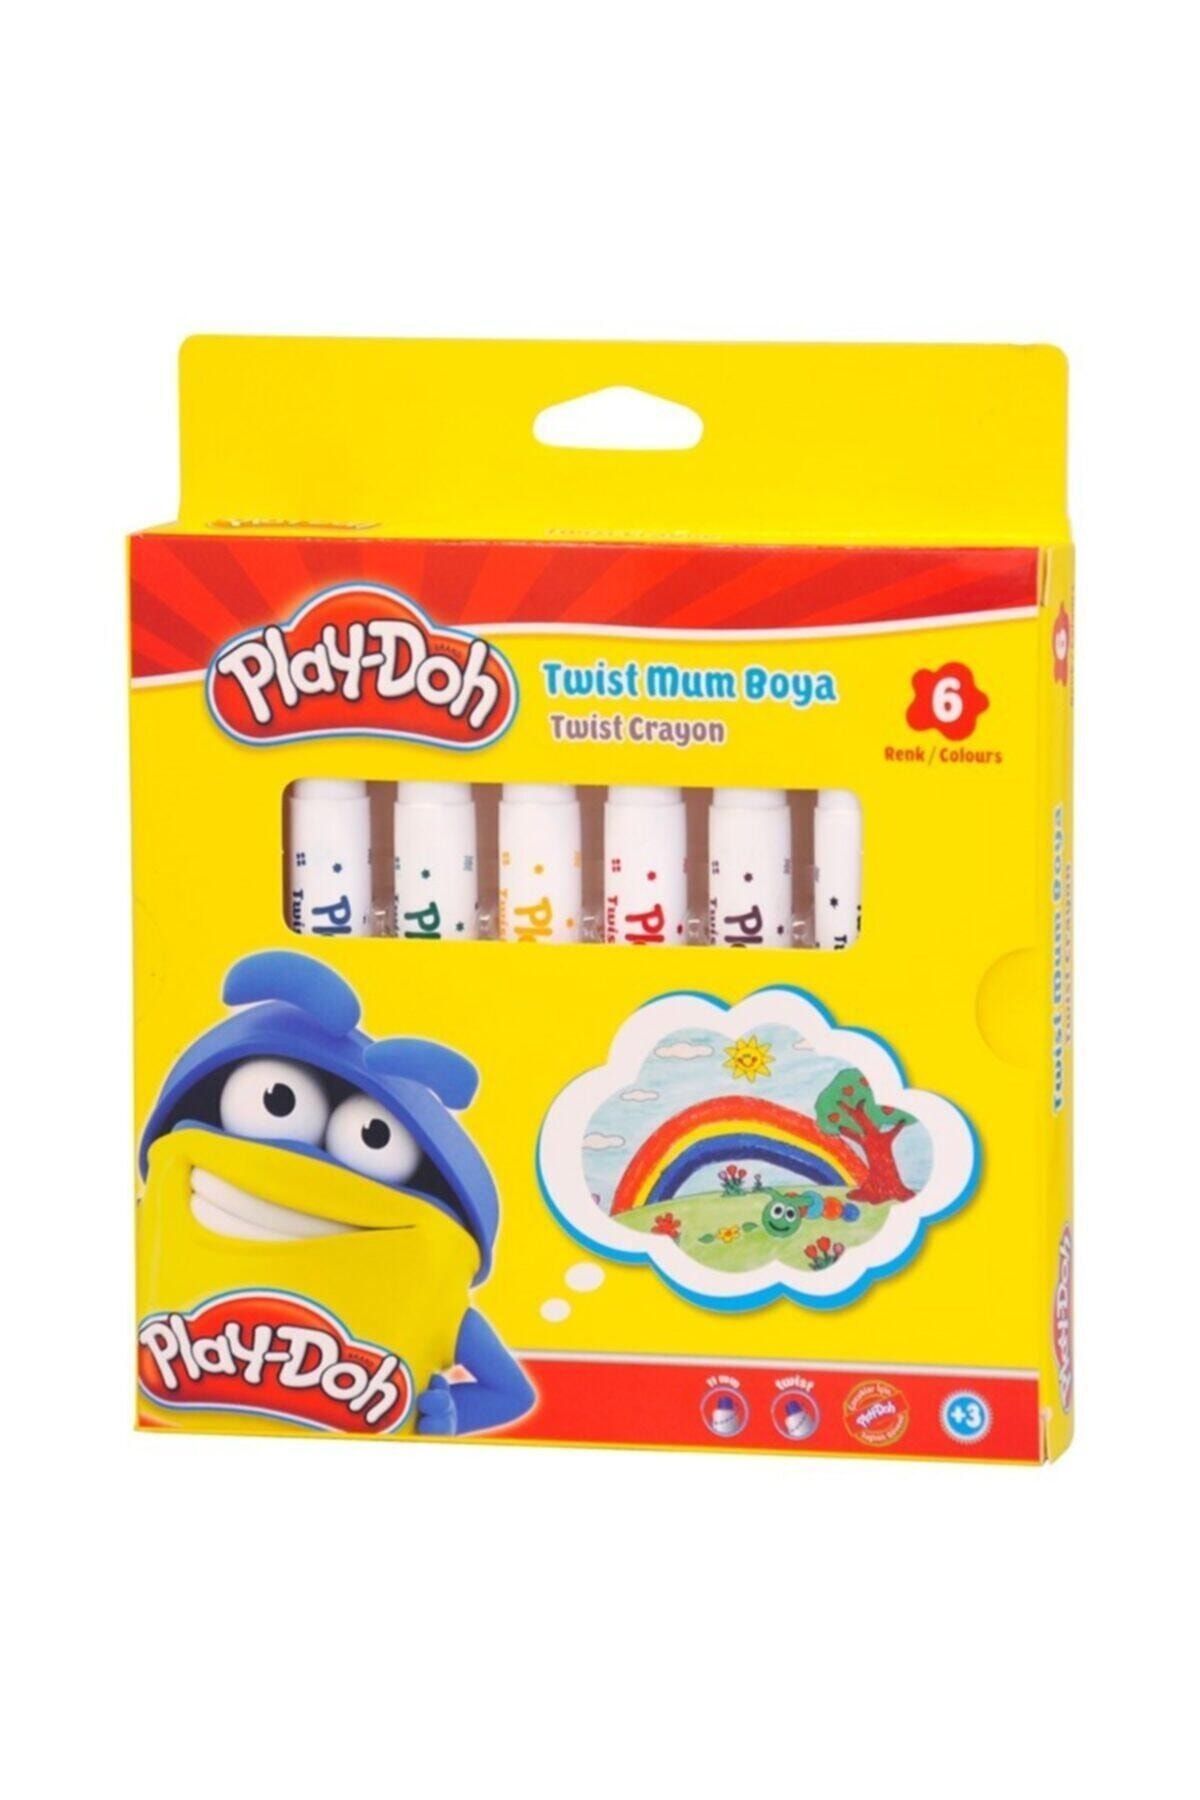 Play Doh Play-doh 6 Renk Silinebilir Crayon Mum Boya Cr007